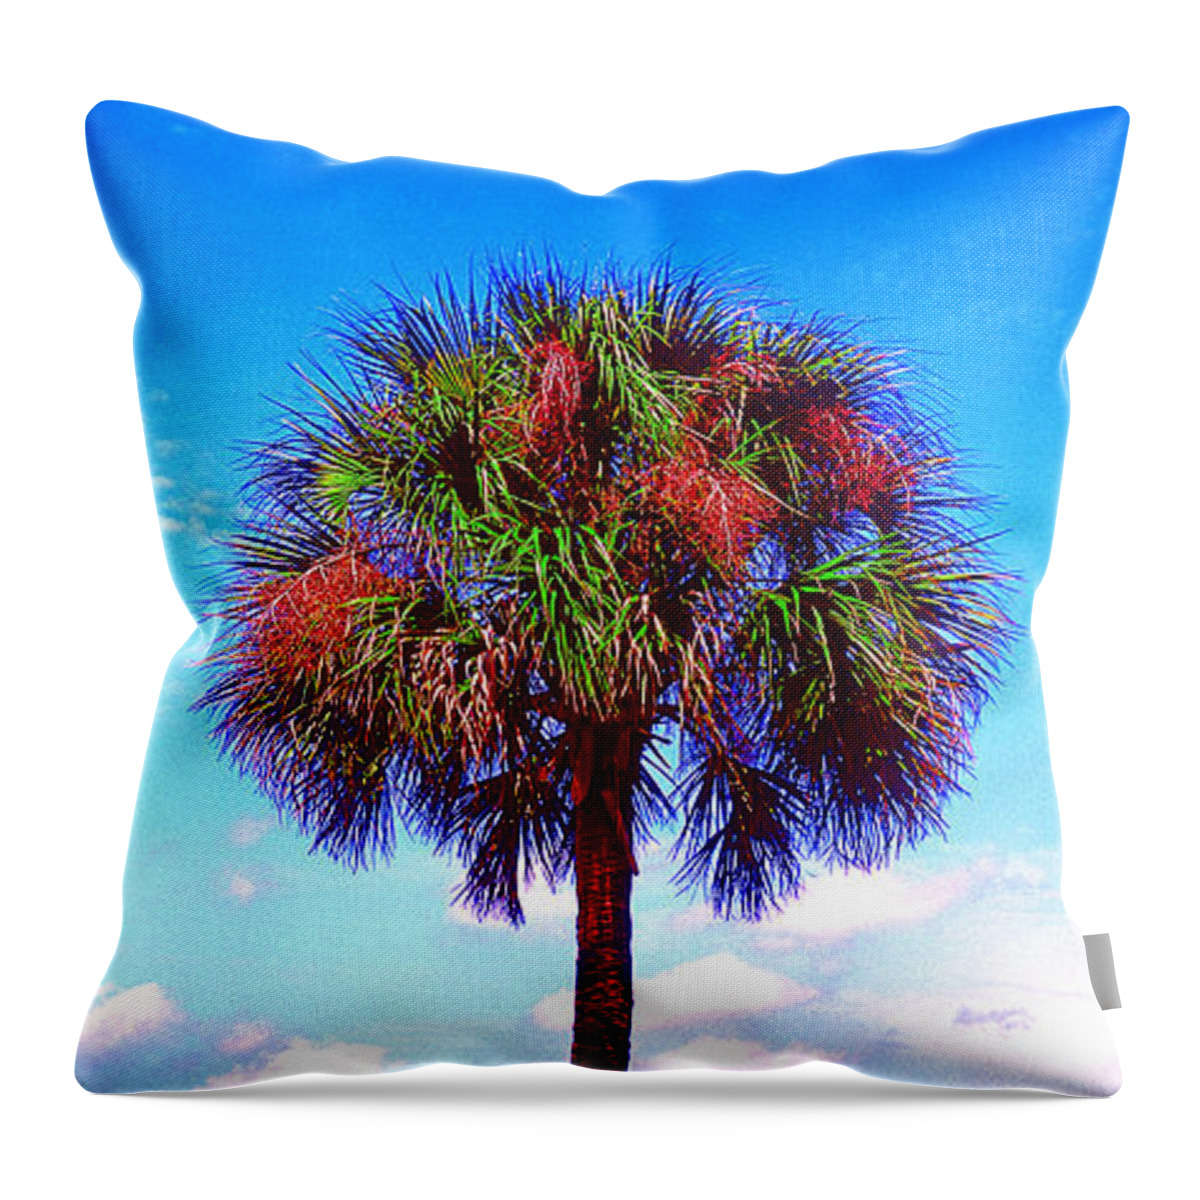 Wild Palms Throw Pillow featuring the photograph Wild Palm 1 by John Douglas